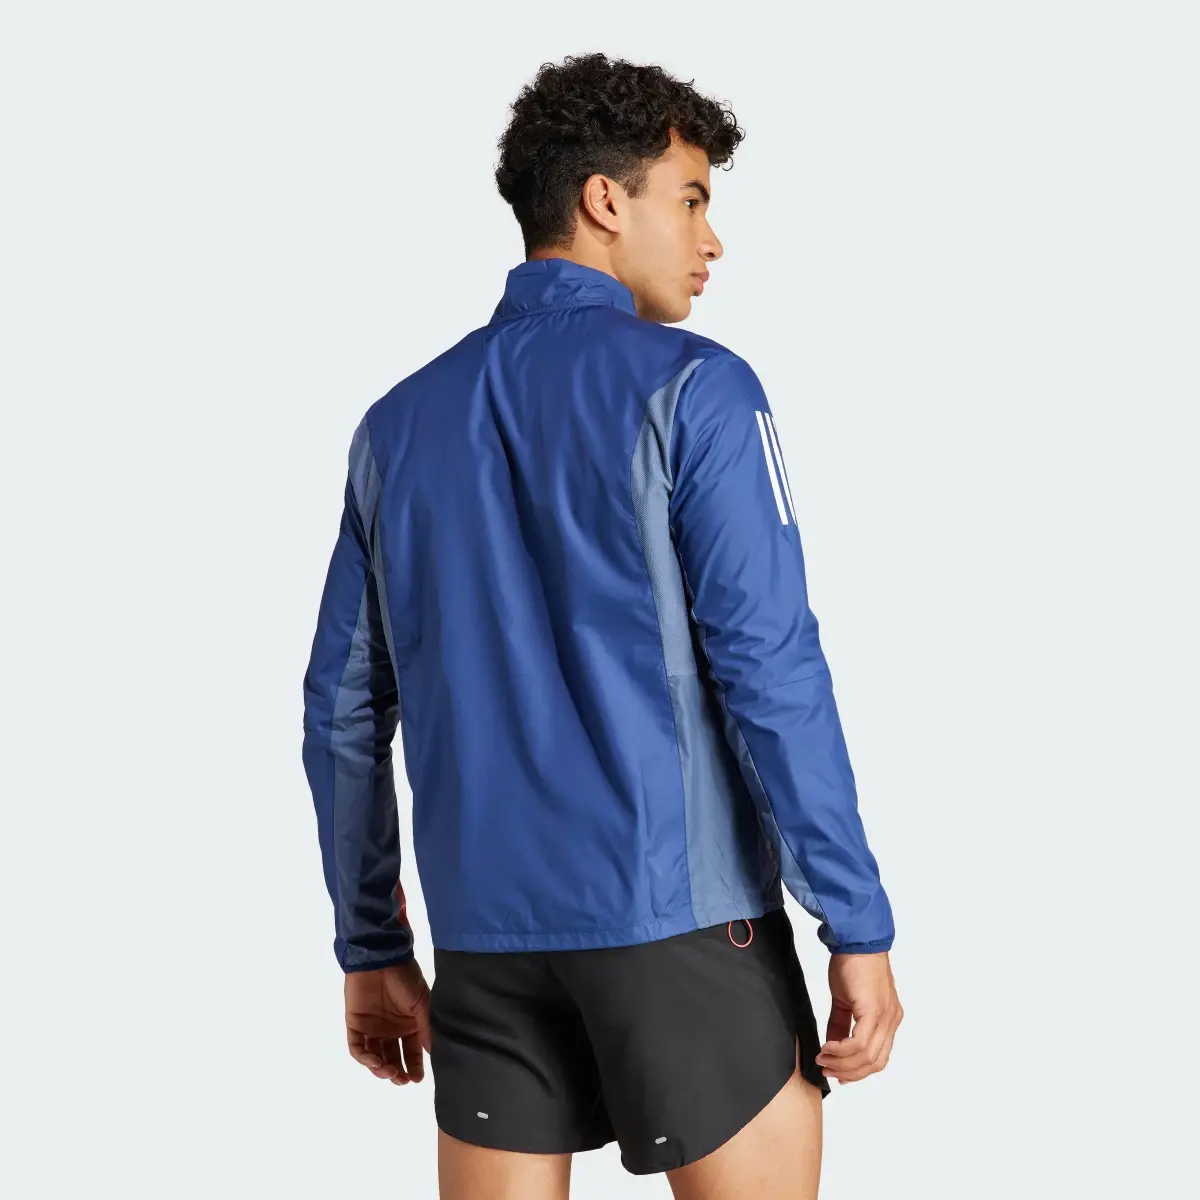 Adidas Own The Run Colorblock Jacket. 3